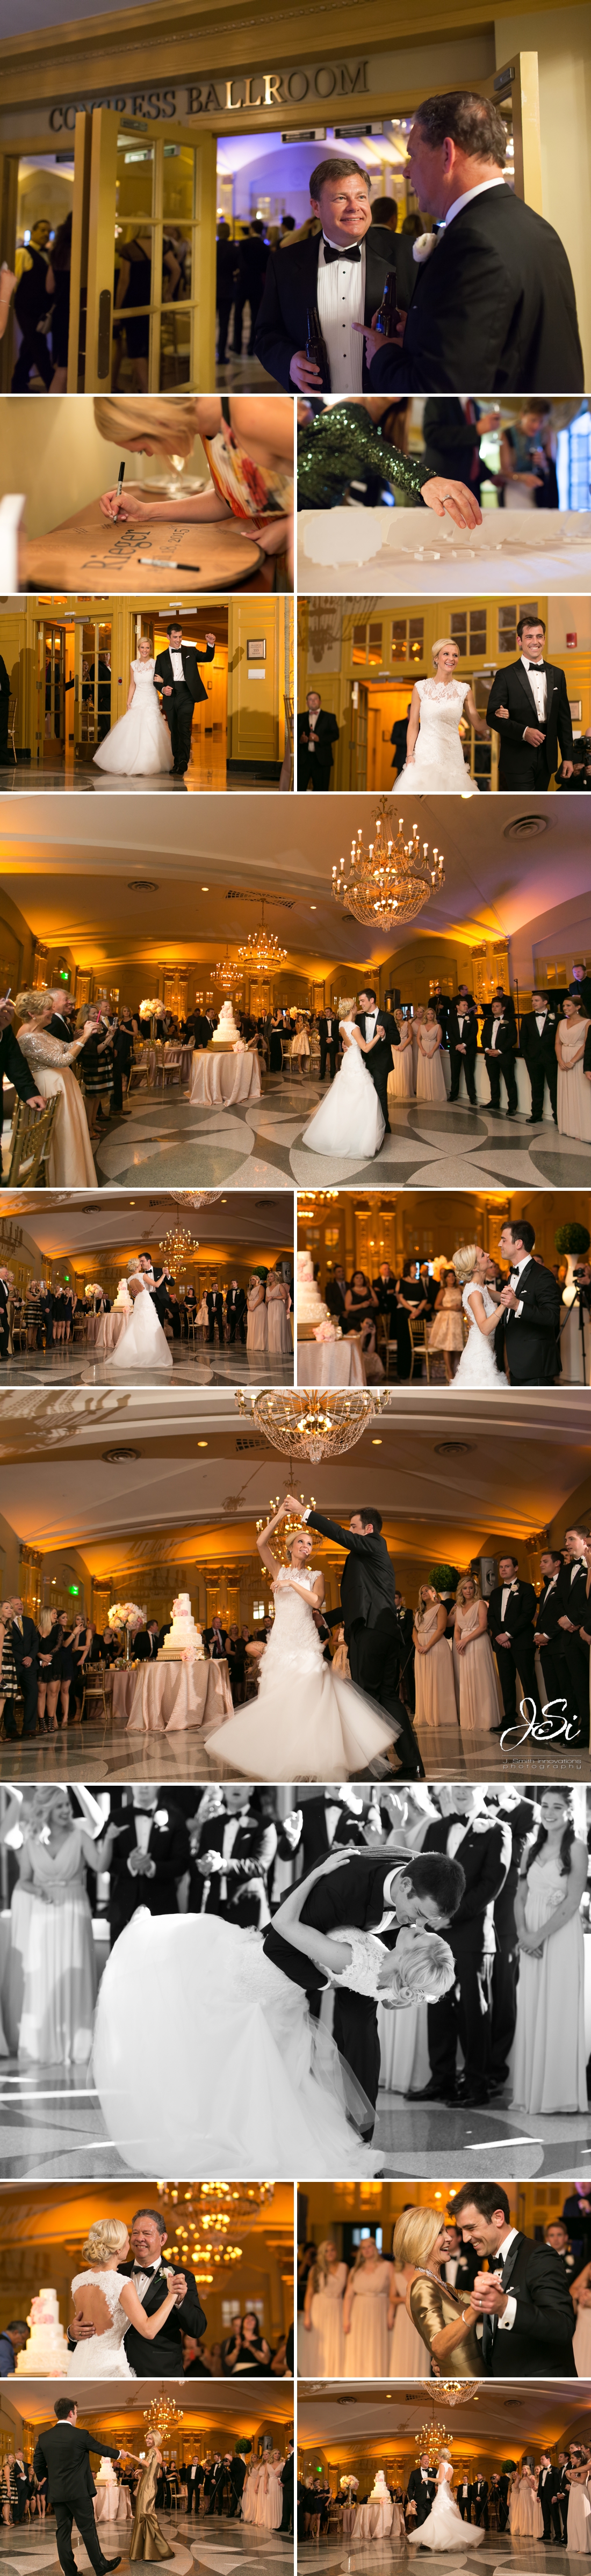 KC HIlton President wedding bride groom first dance photo